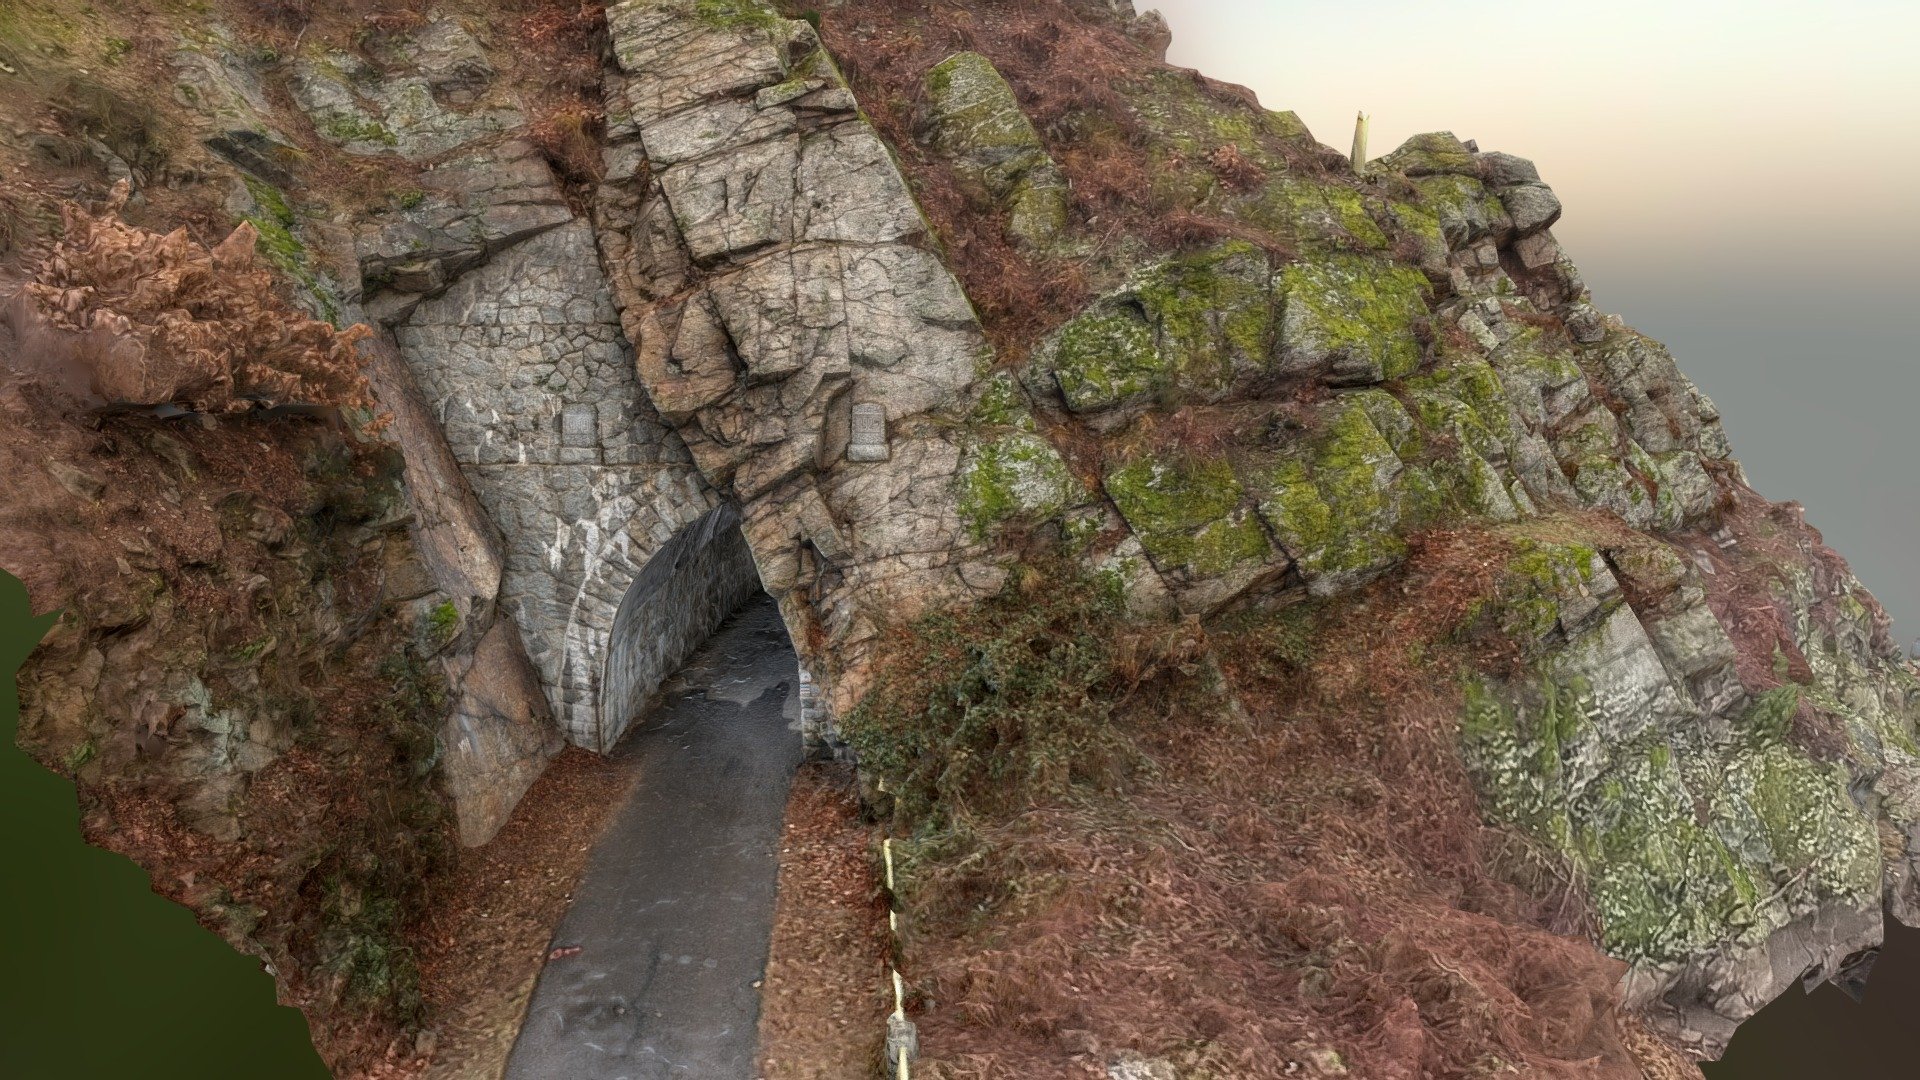 Tunnel contructed in Izera orthogneiss rocks, using natural jointing of the rock mass. Located near Złotniki hydropowerplant in Złotniki Lubańskie, Poland. Built in 1919. 

Talsperre Goldentraum Spitztunnel.

51°01&lsquo;22.8